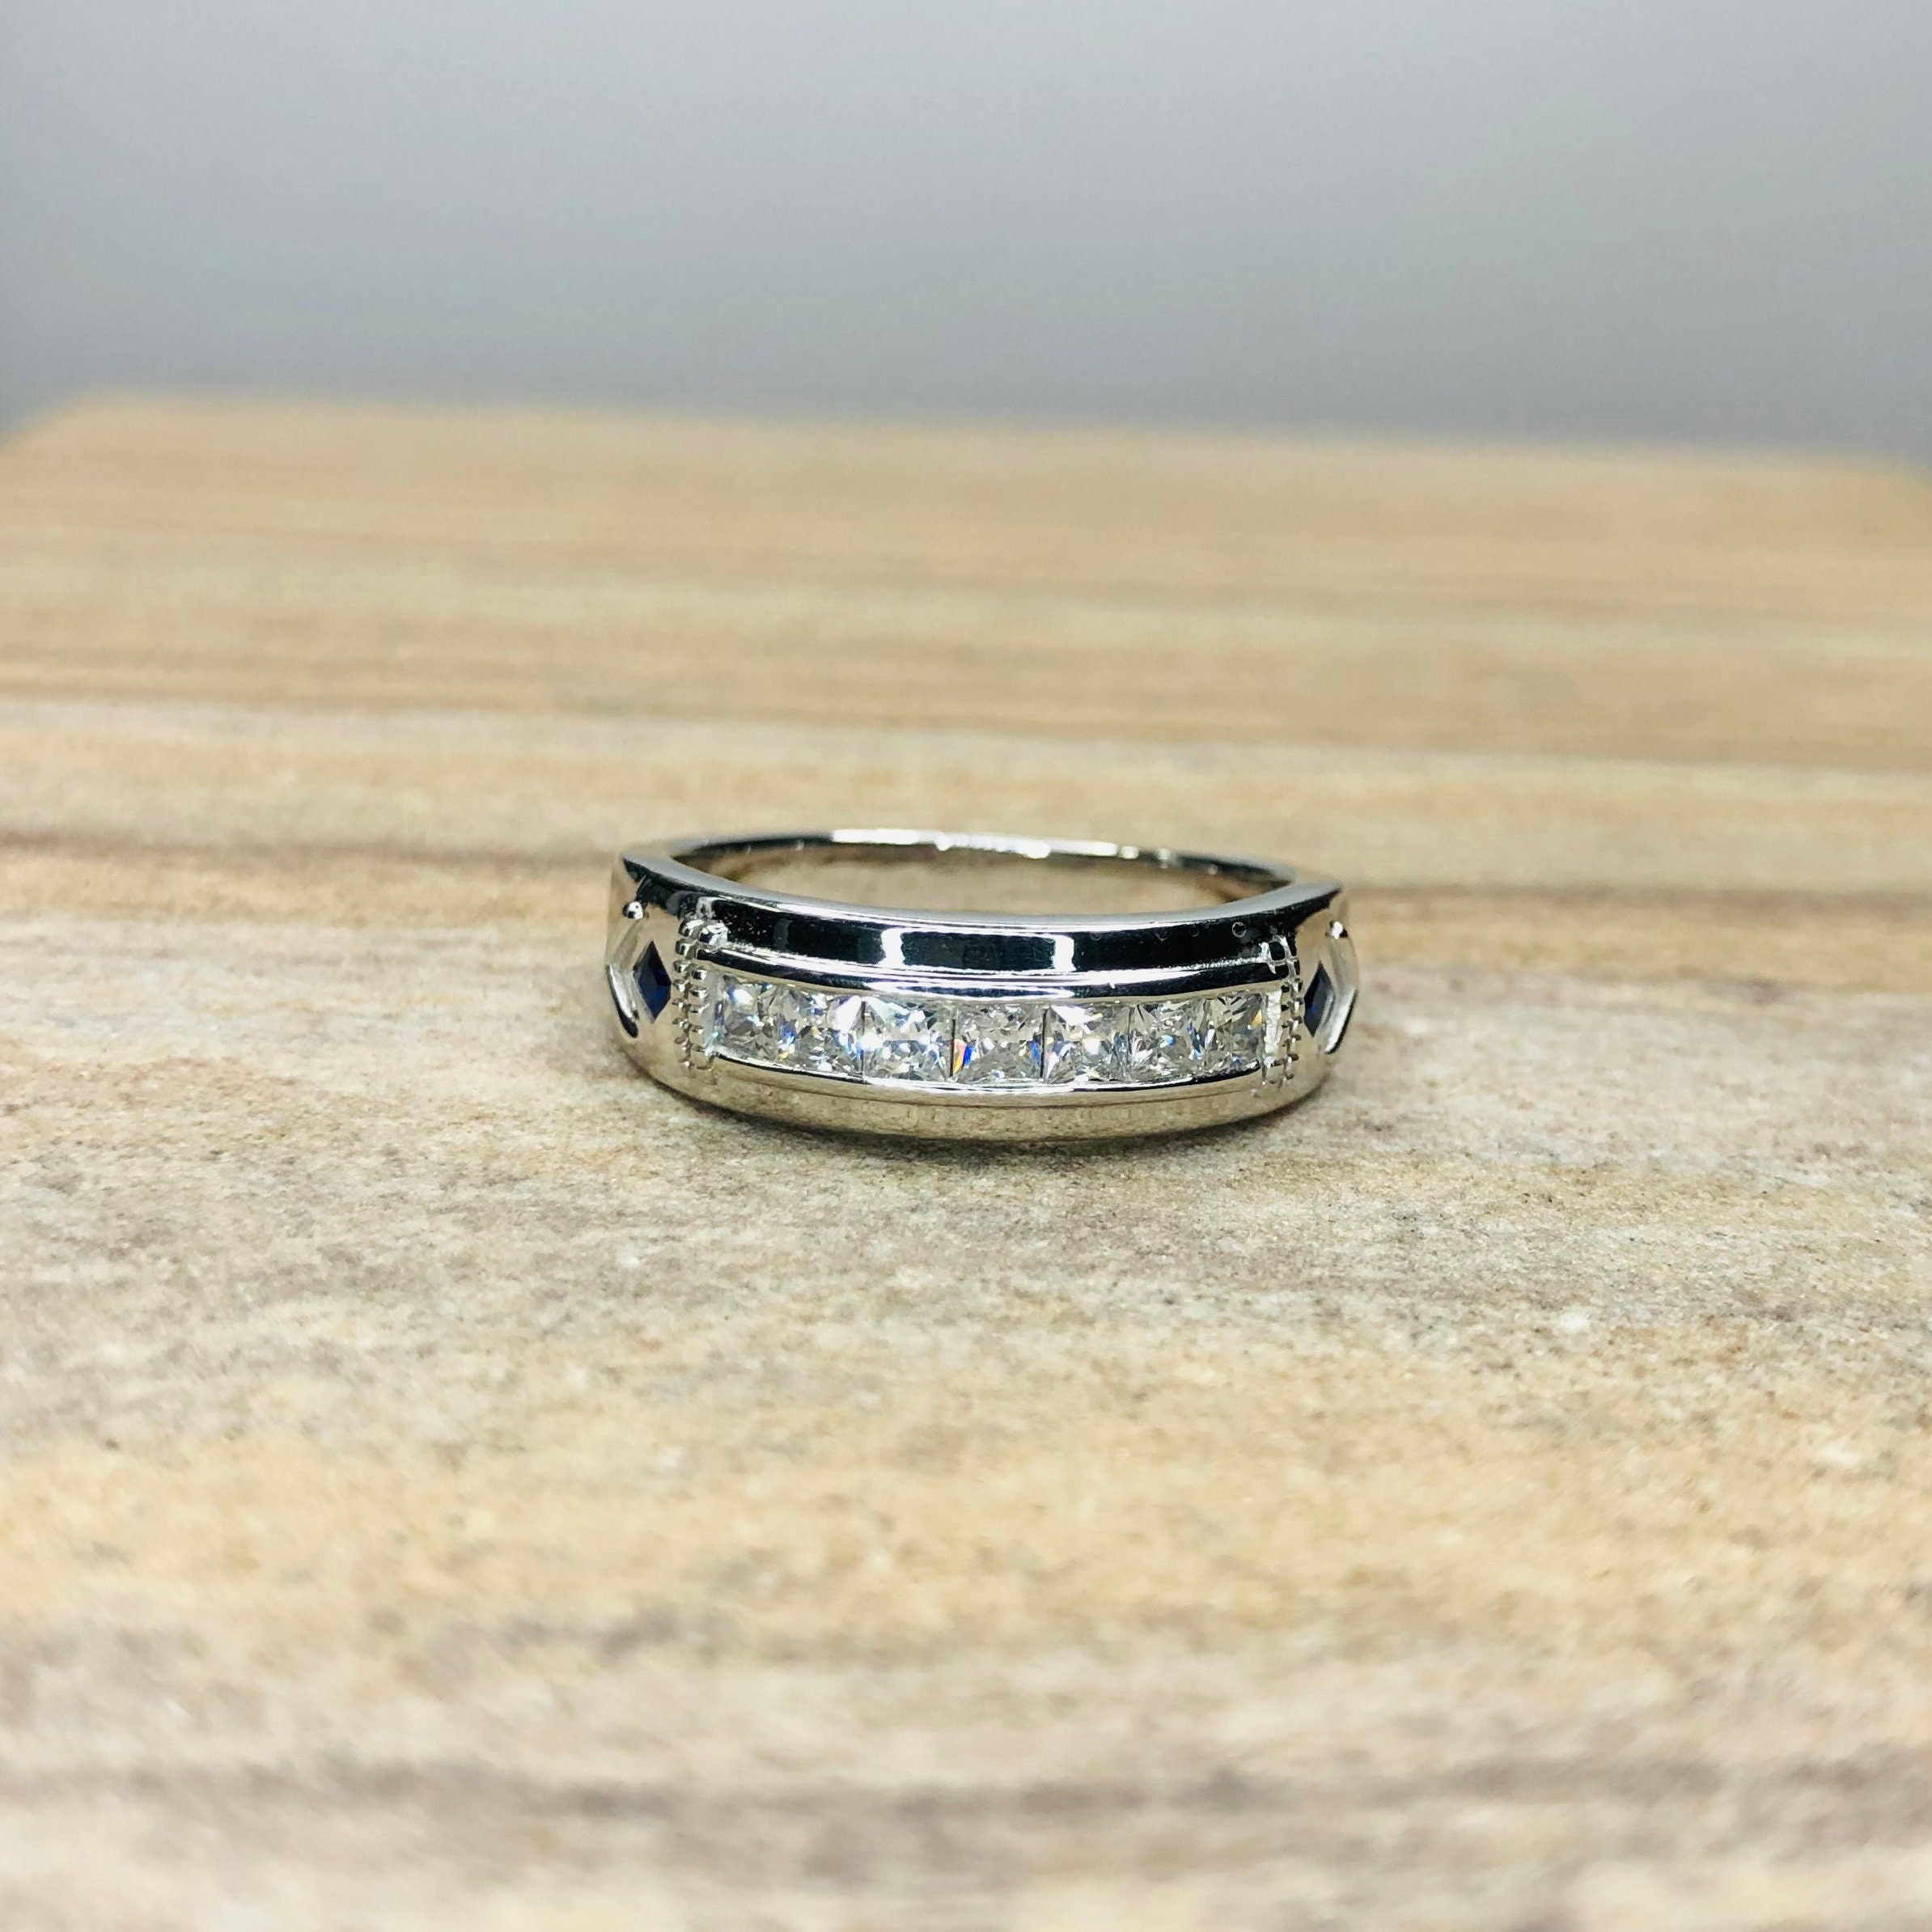 White Gold Ring Groom's Ring Channel Set Ring Lab Diamond Ring Men's Wedding Ring 2076 Men's Engagement Ring 925 Sterling Silver Ring